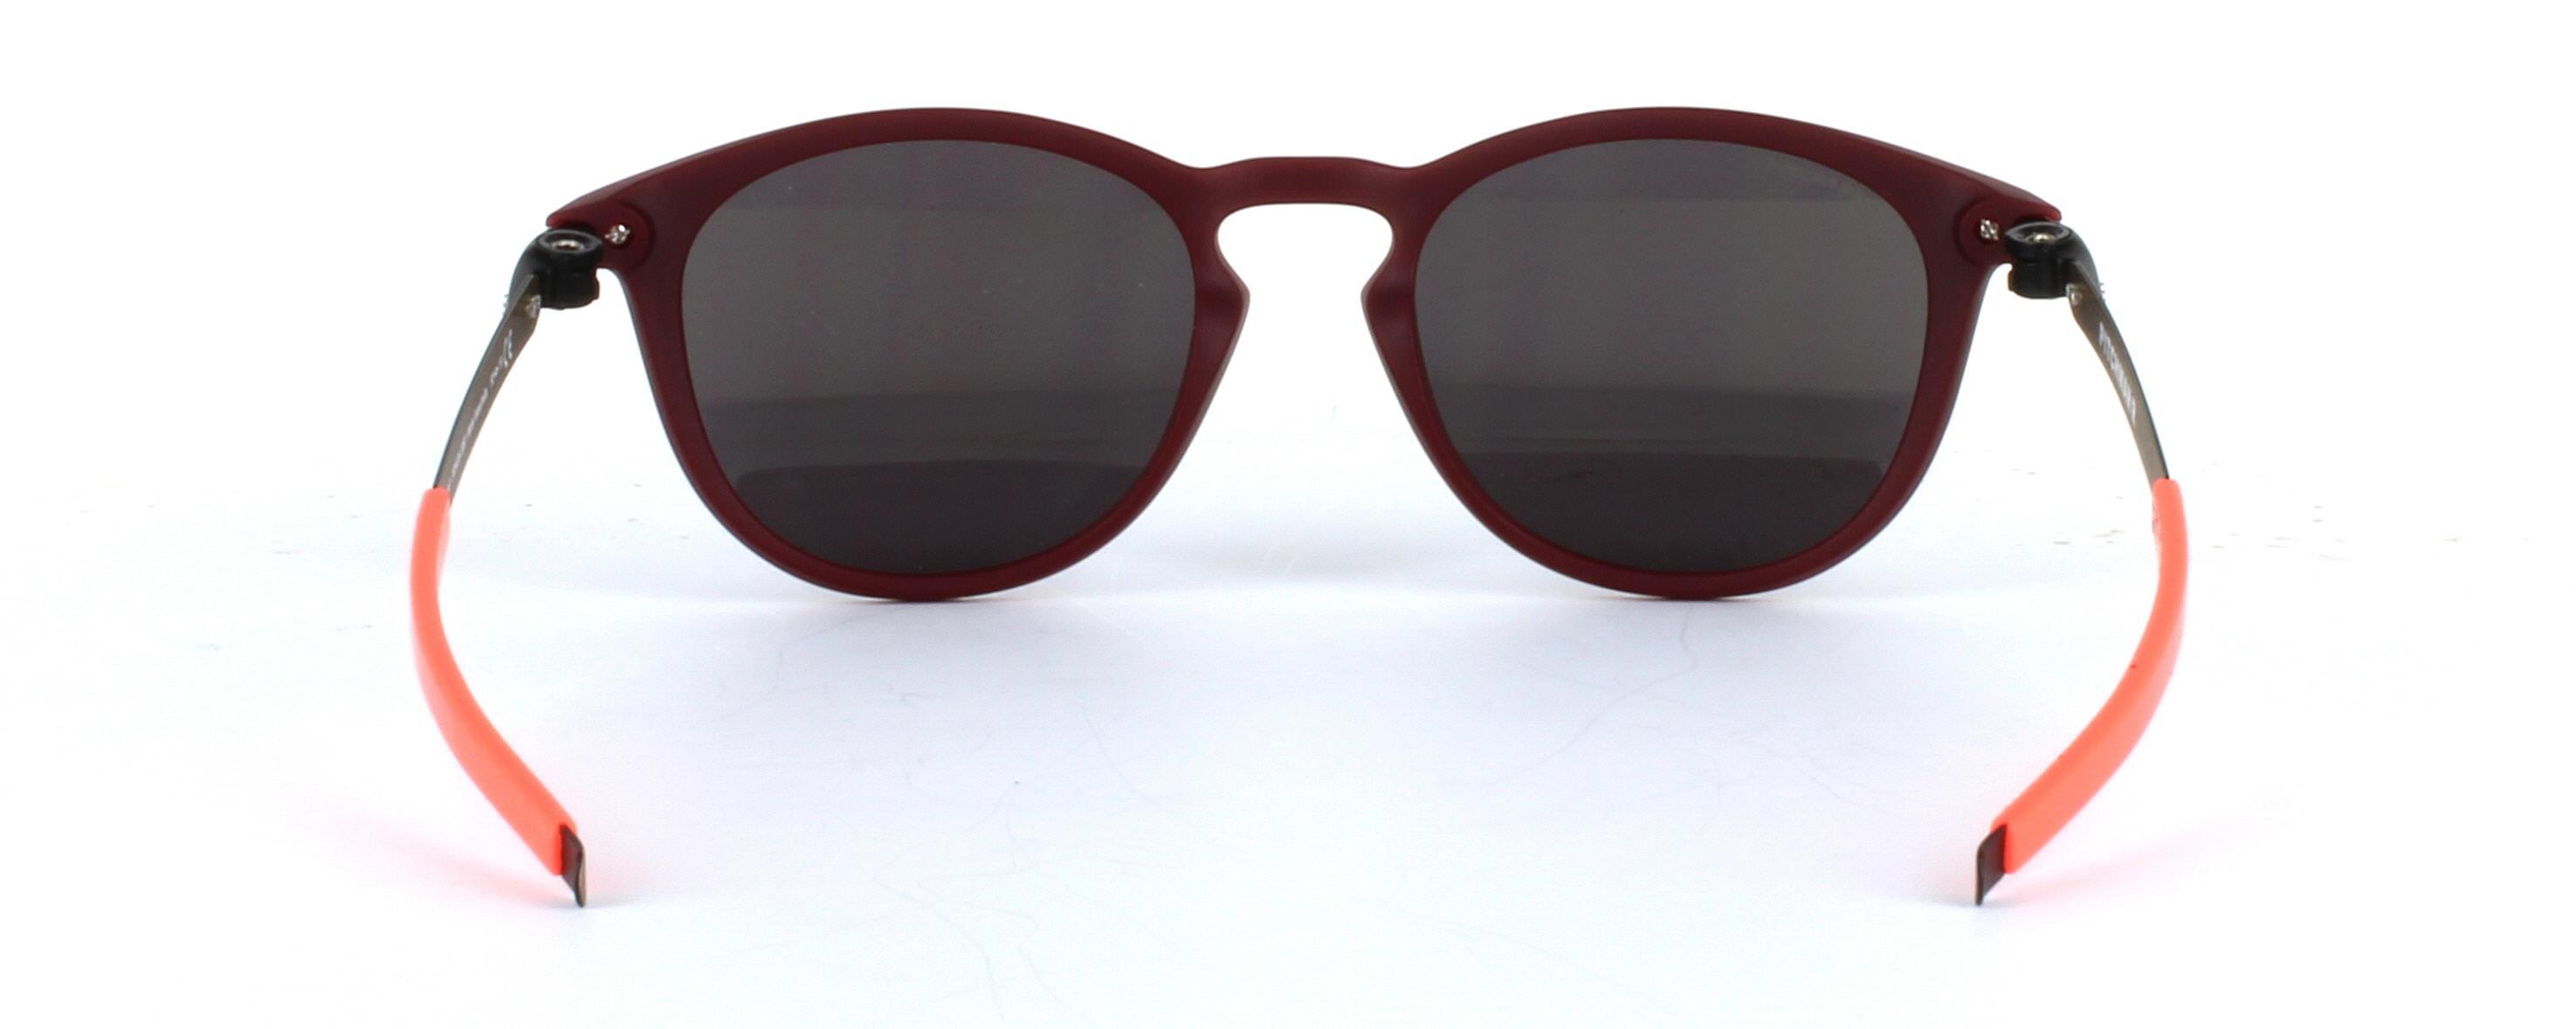 Oakley (O9439) Burgundy Full Rim Plastic Sunglasses - Image View 3